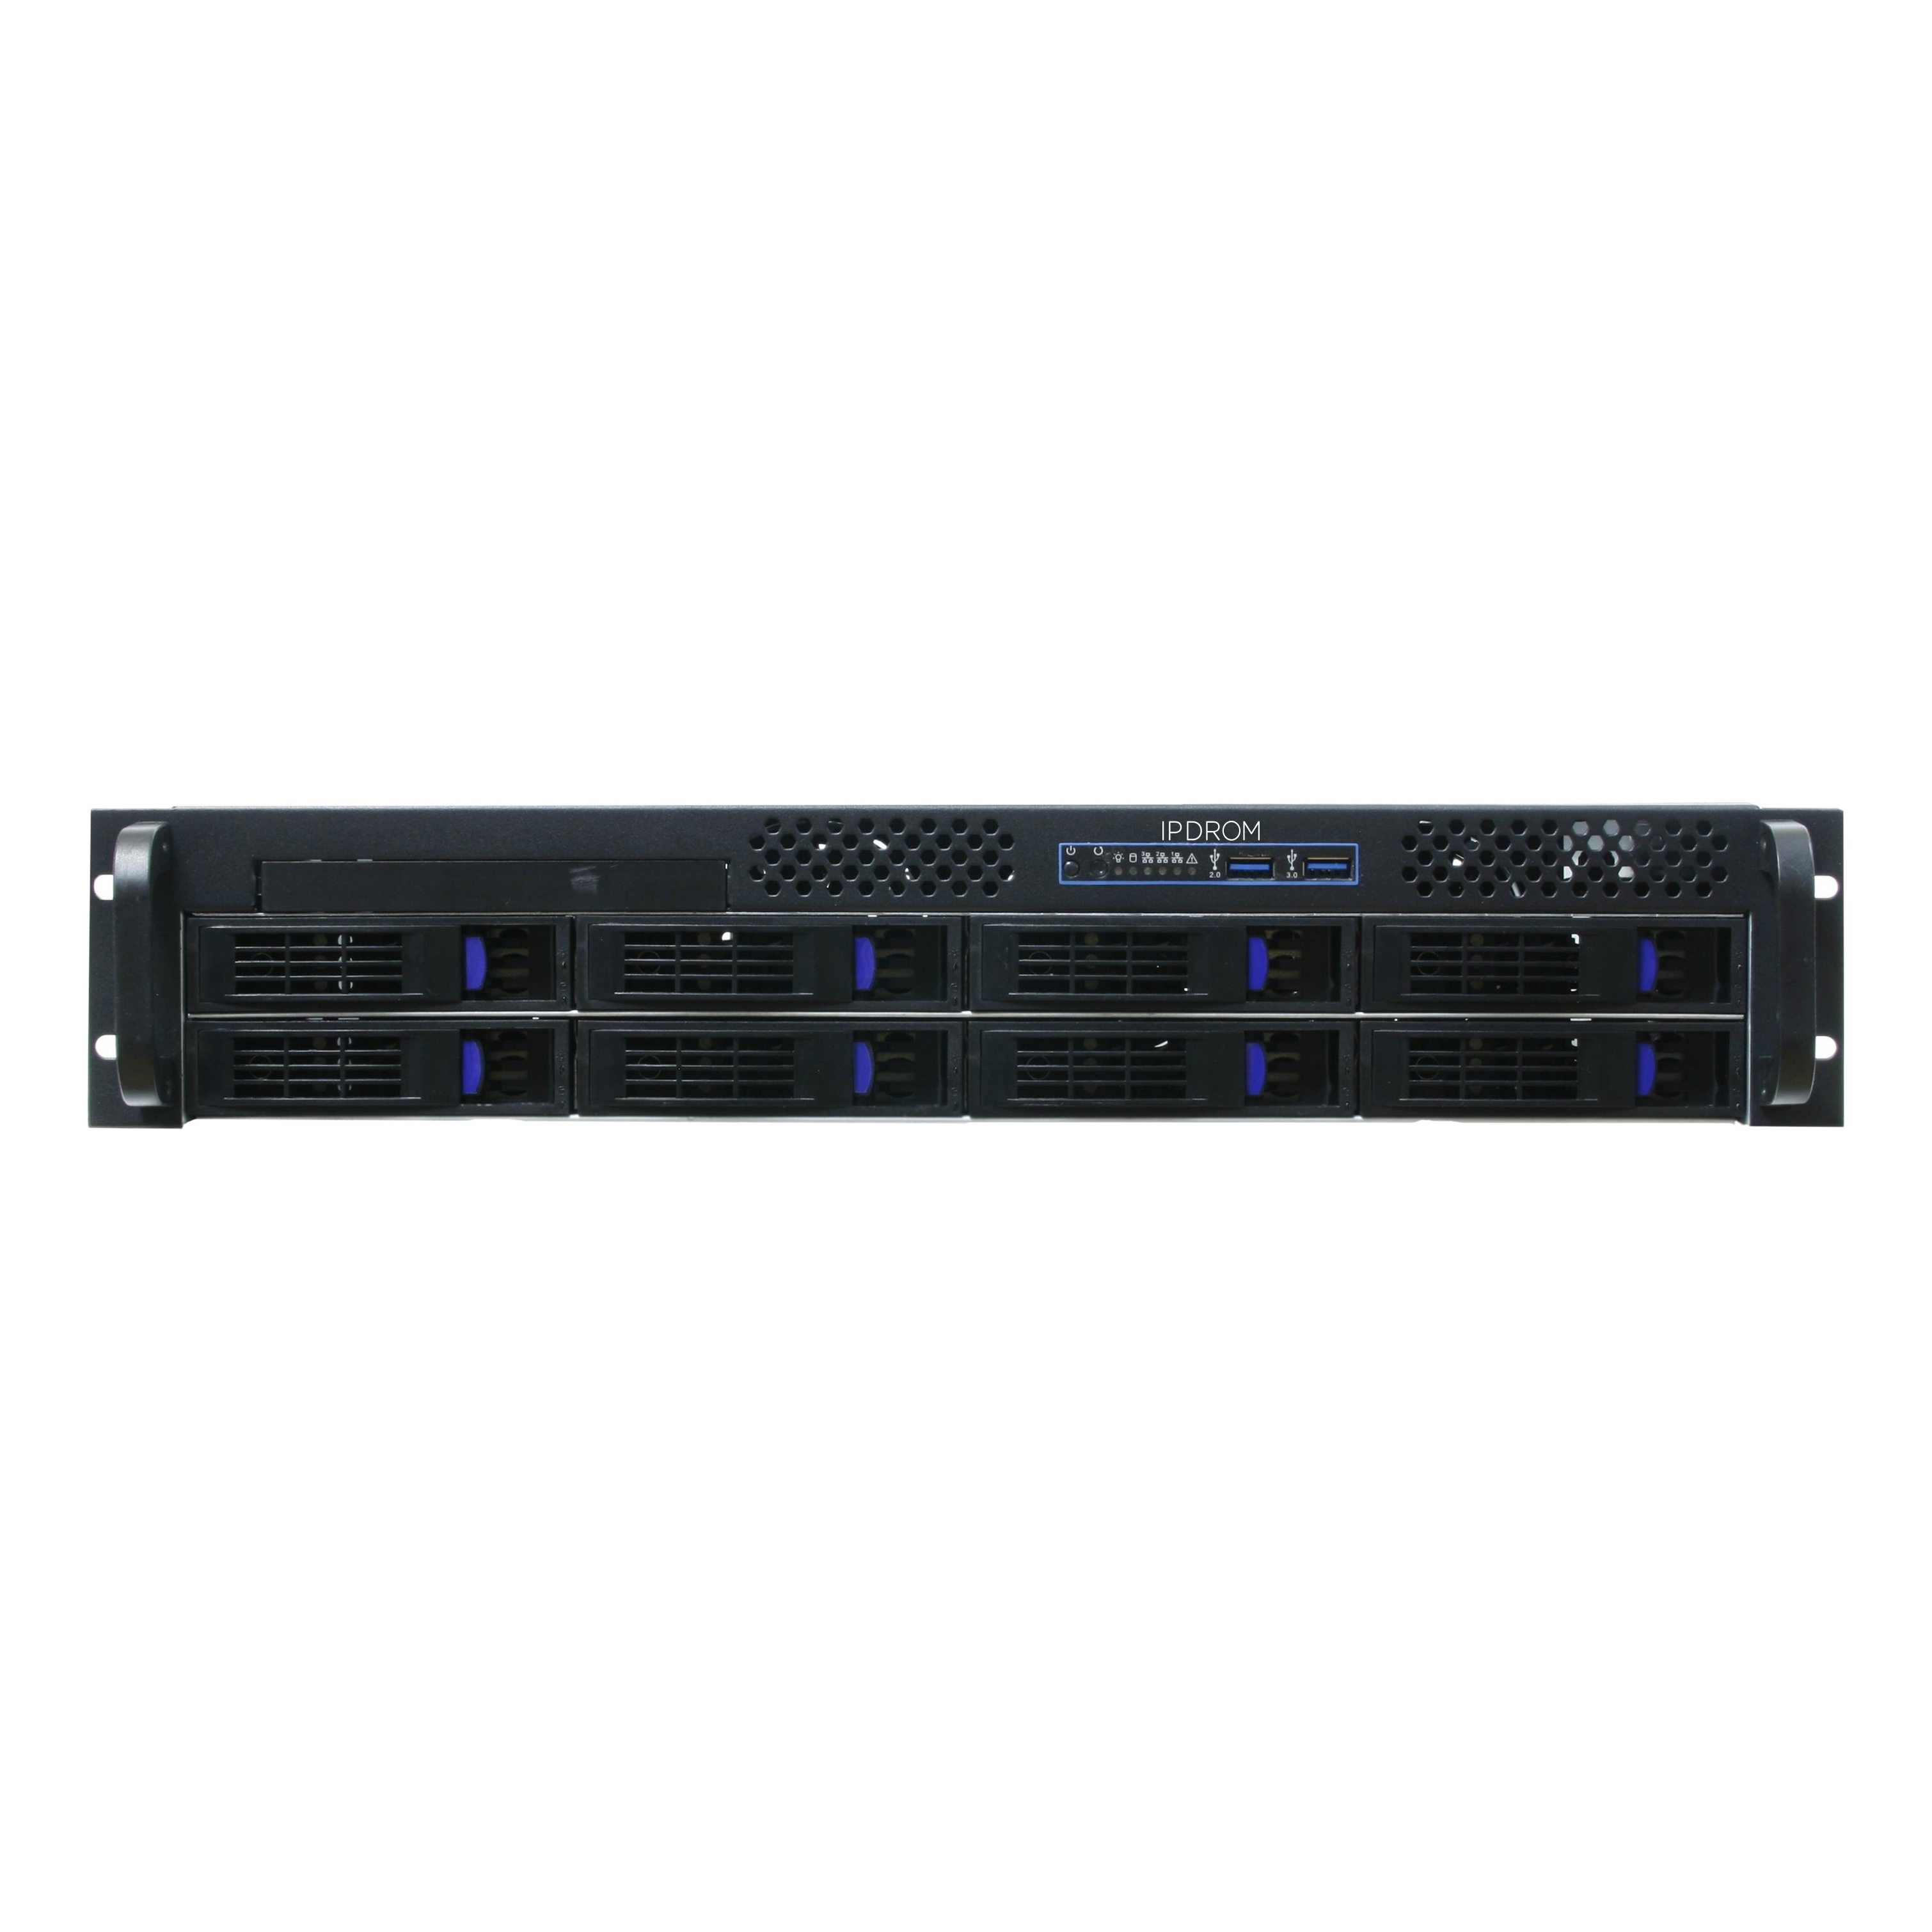 Сервер IPDROM Enterprise (E-16-РД-С2-24/Р5-2Э)